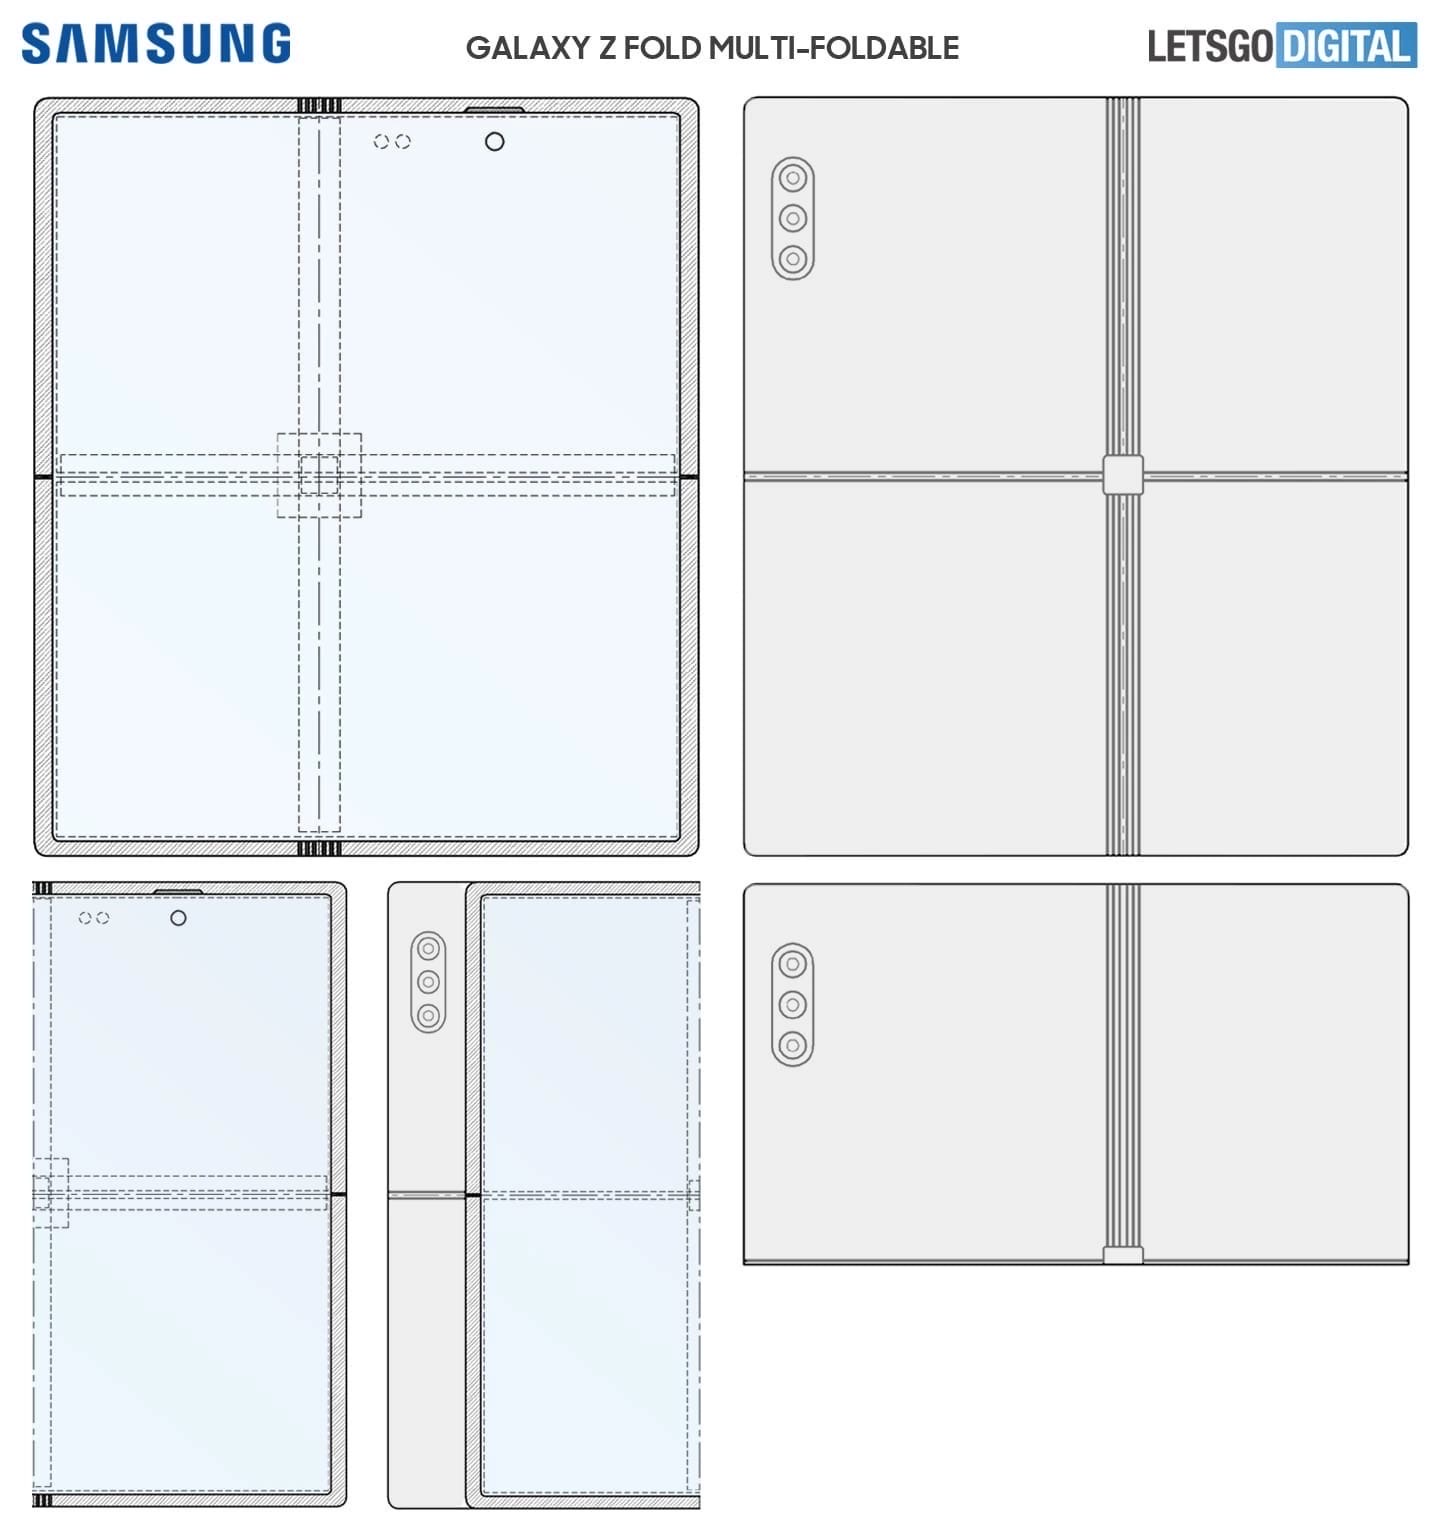 Samsung запатентовала смартфон с двумя типами складывания.